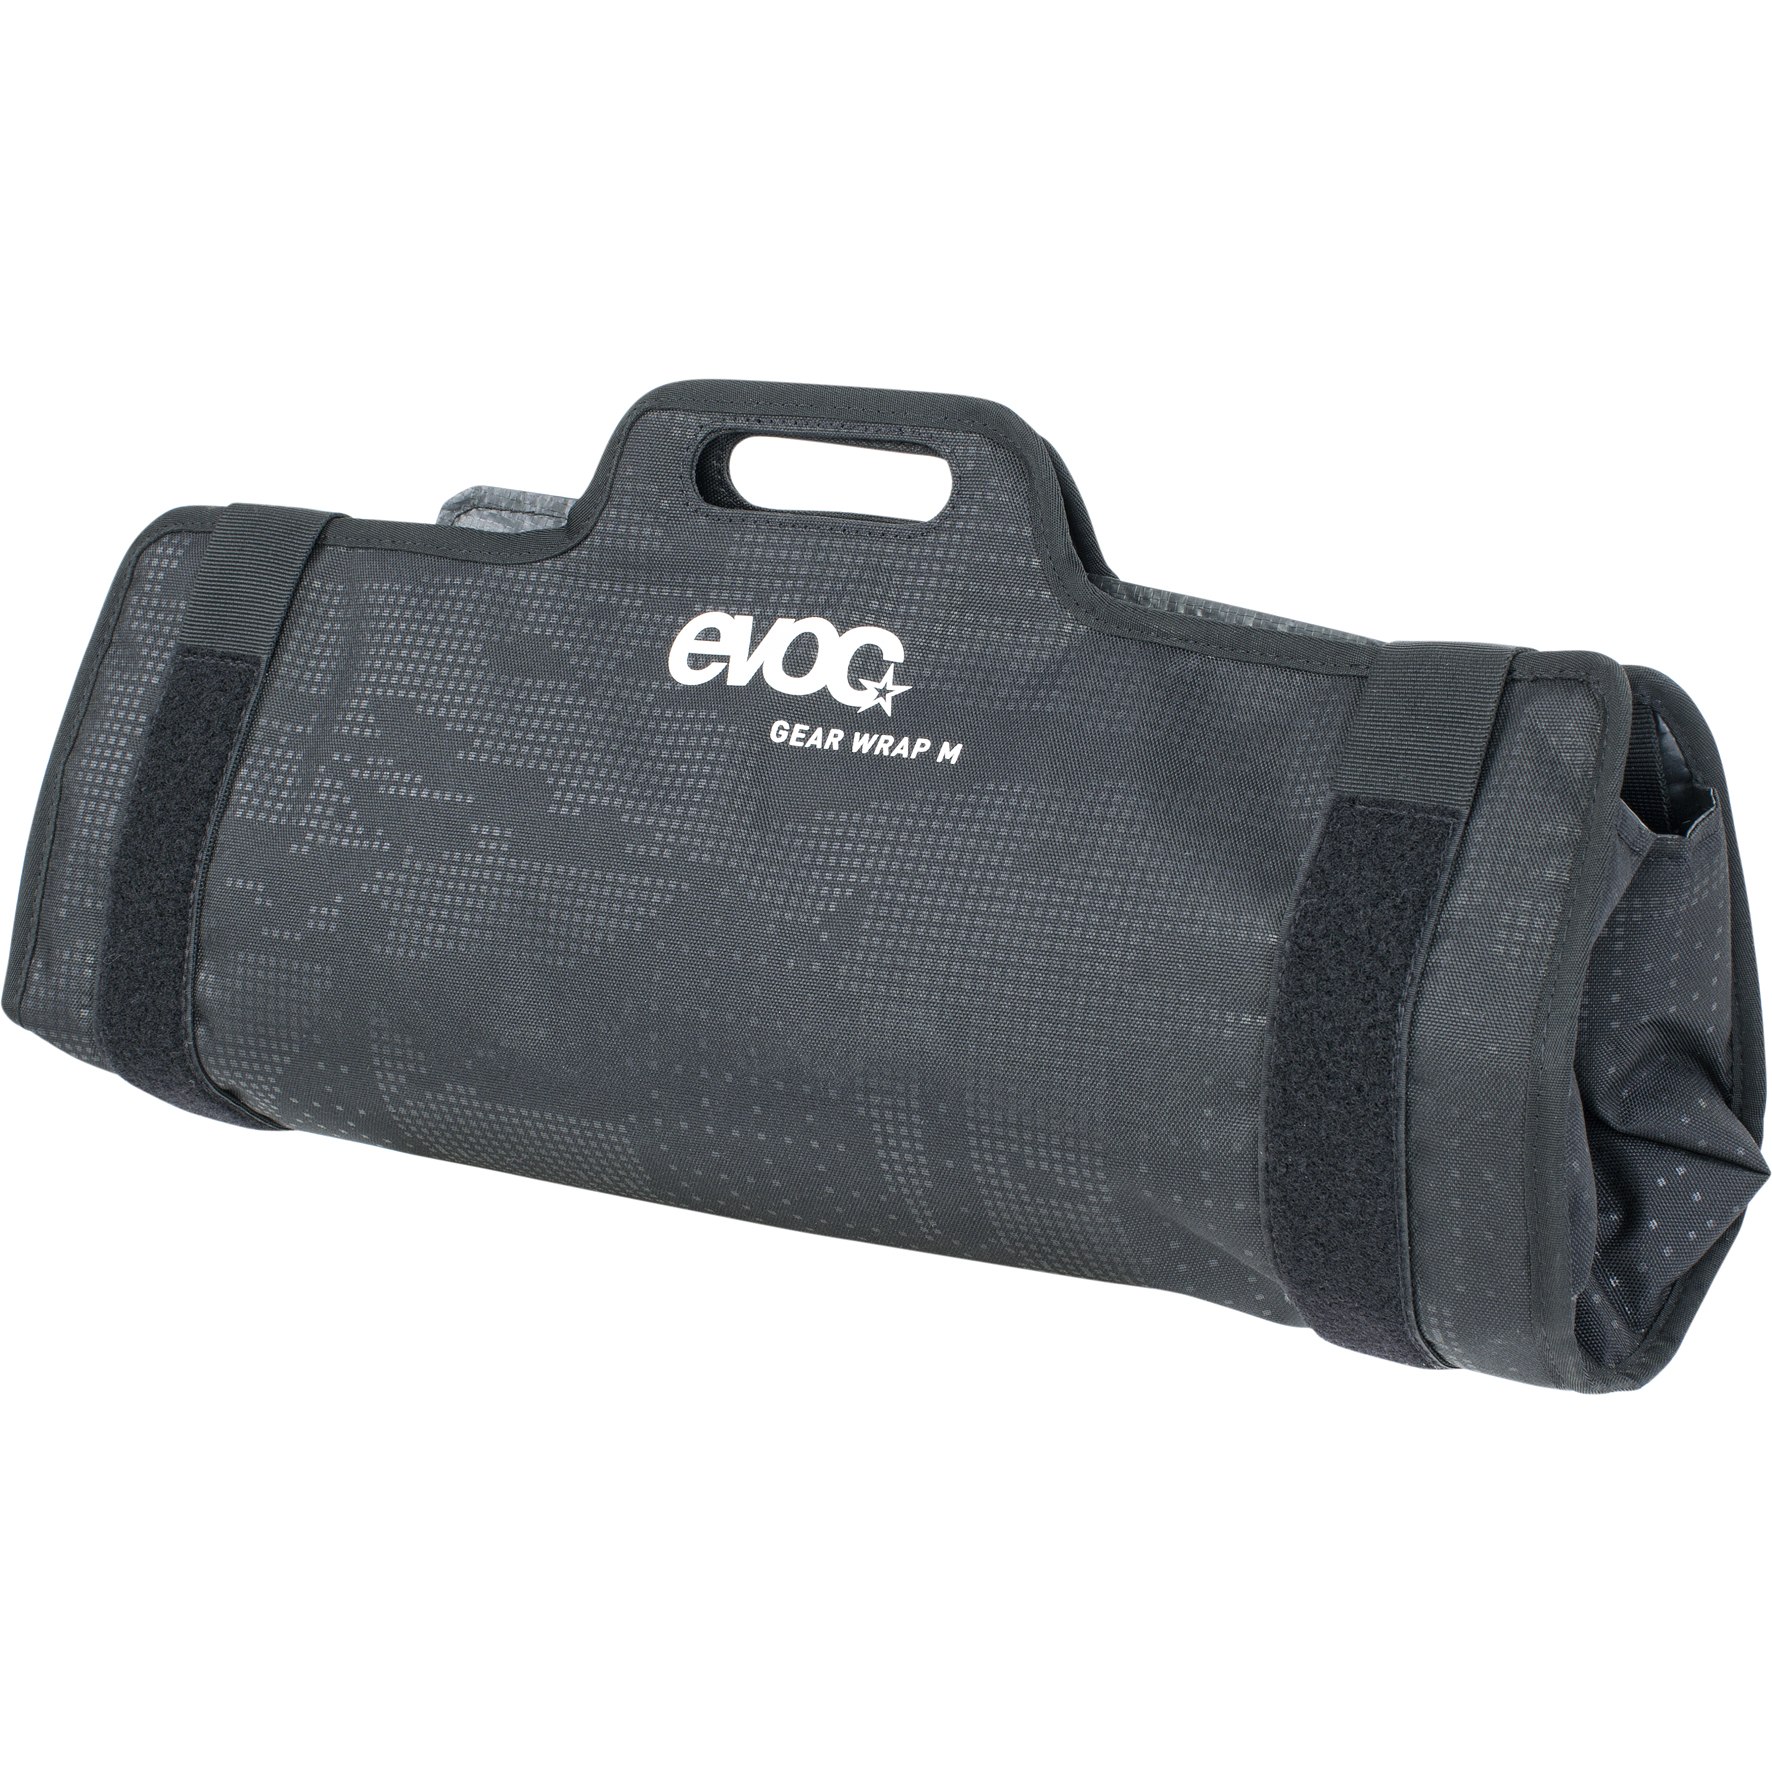 Picture of EVOC Gear Wrap M Tool Bag - Black